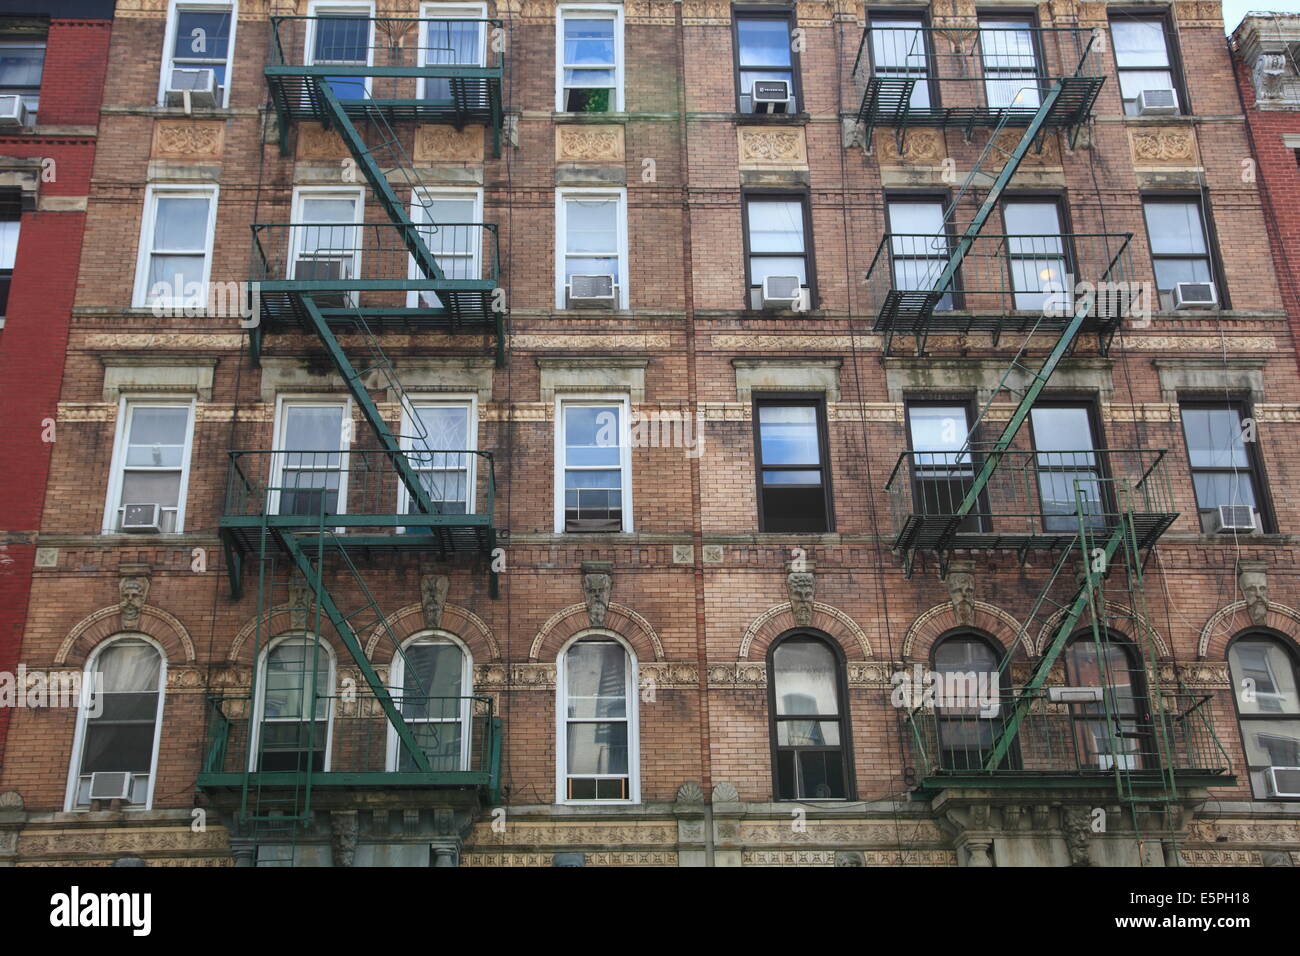 Gebäude featured auf Cover des Albums Led Zeppelin, Physical Graffiti, East Village, Manhattan, New York City, USA Stockfoto